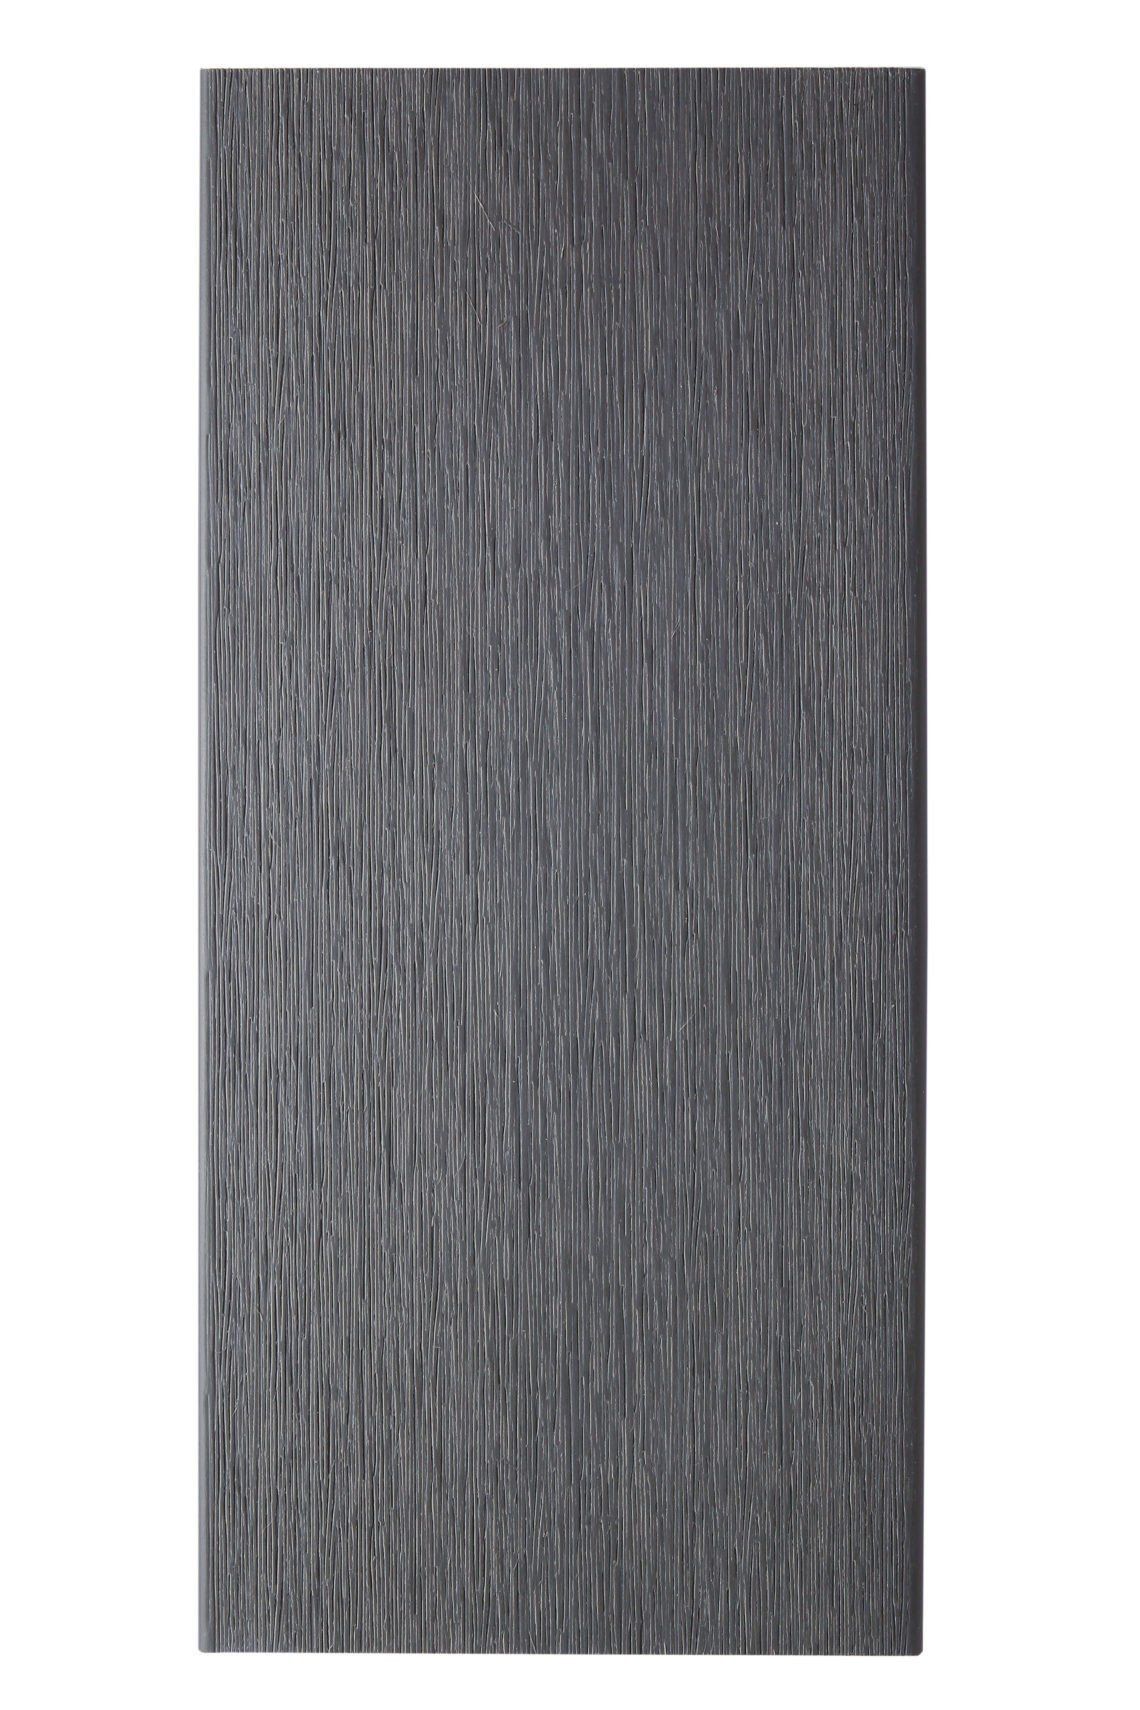 Dark grey - face lisse - clôture en composite - brooklyn - densité 1170 kg/m3_0